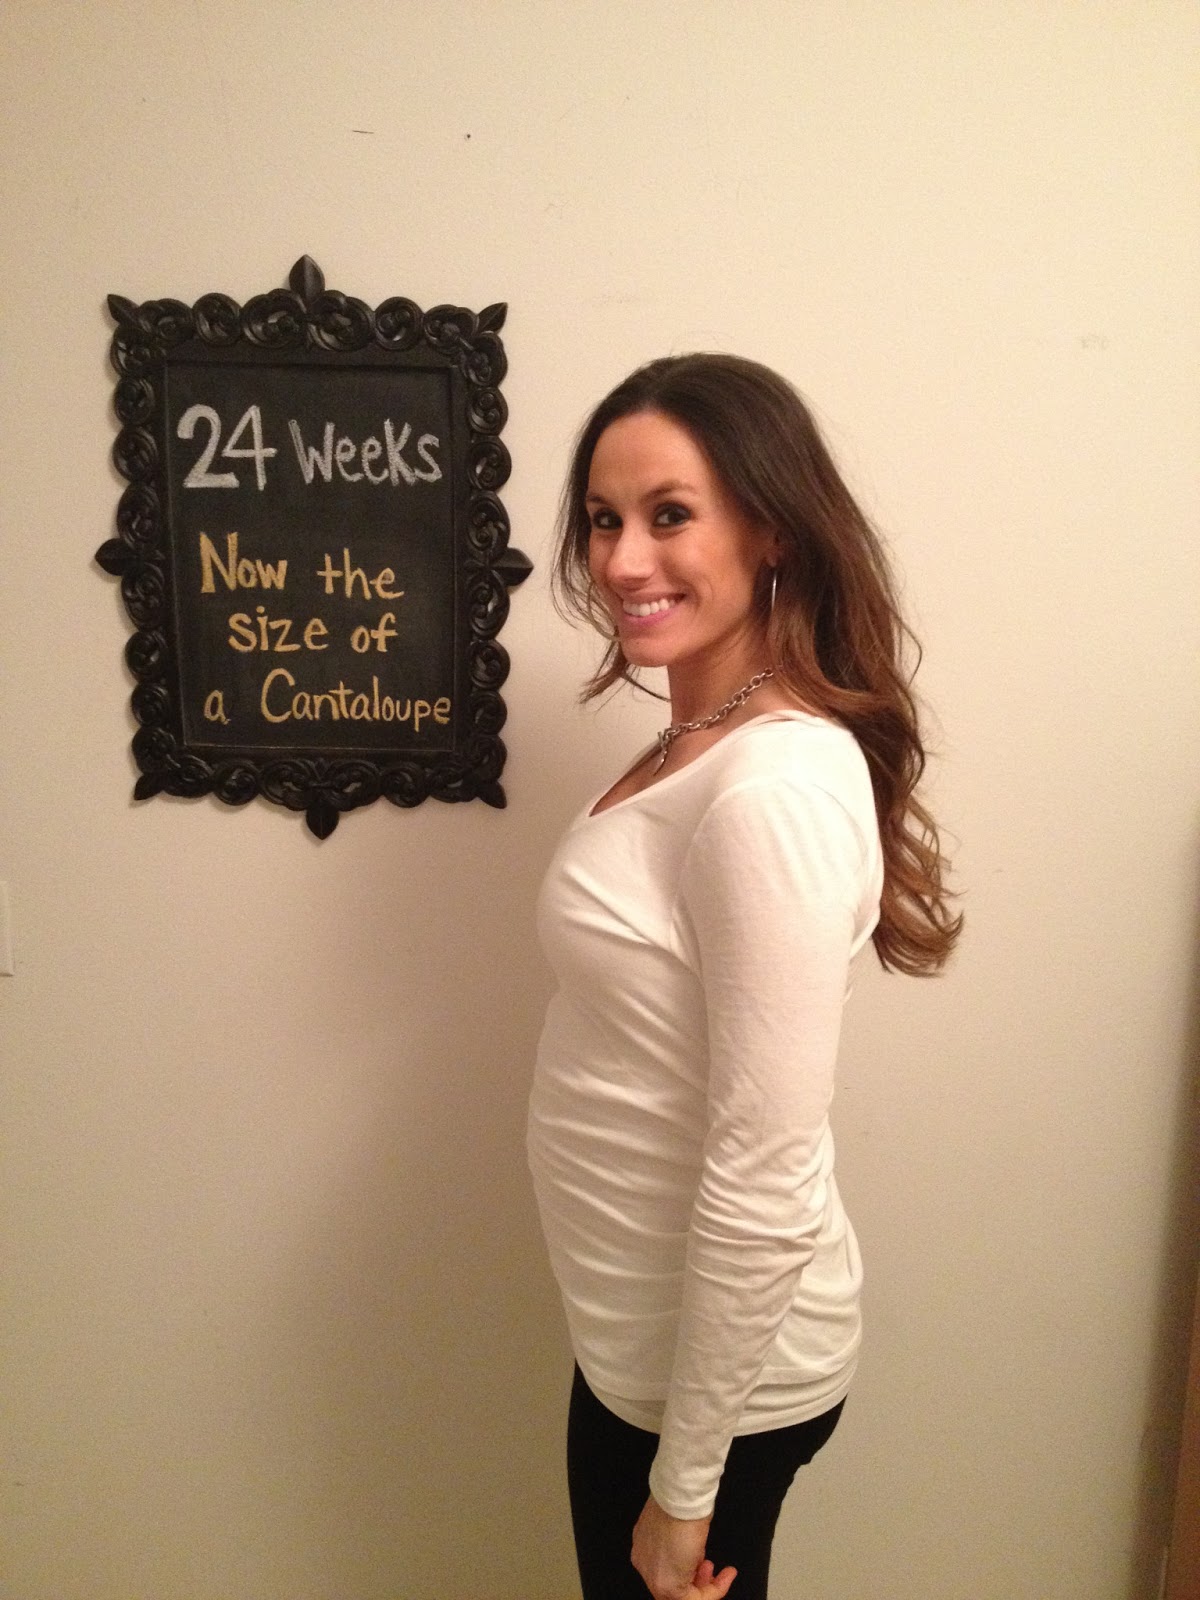 Baby Development at 24 Weeks Video